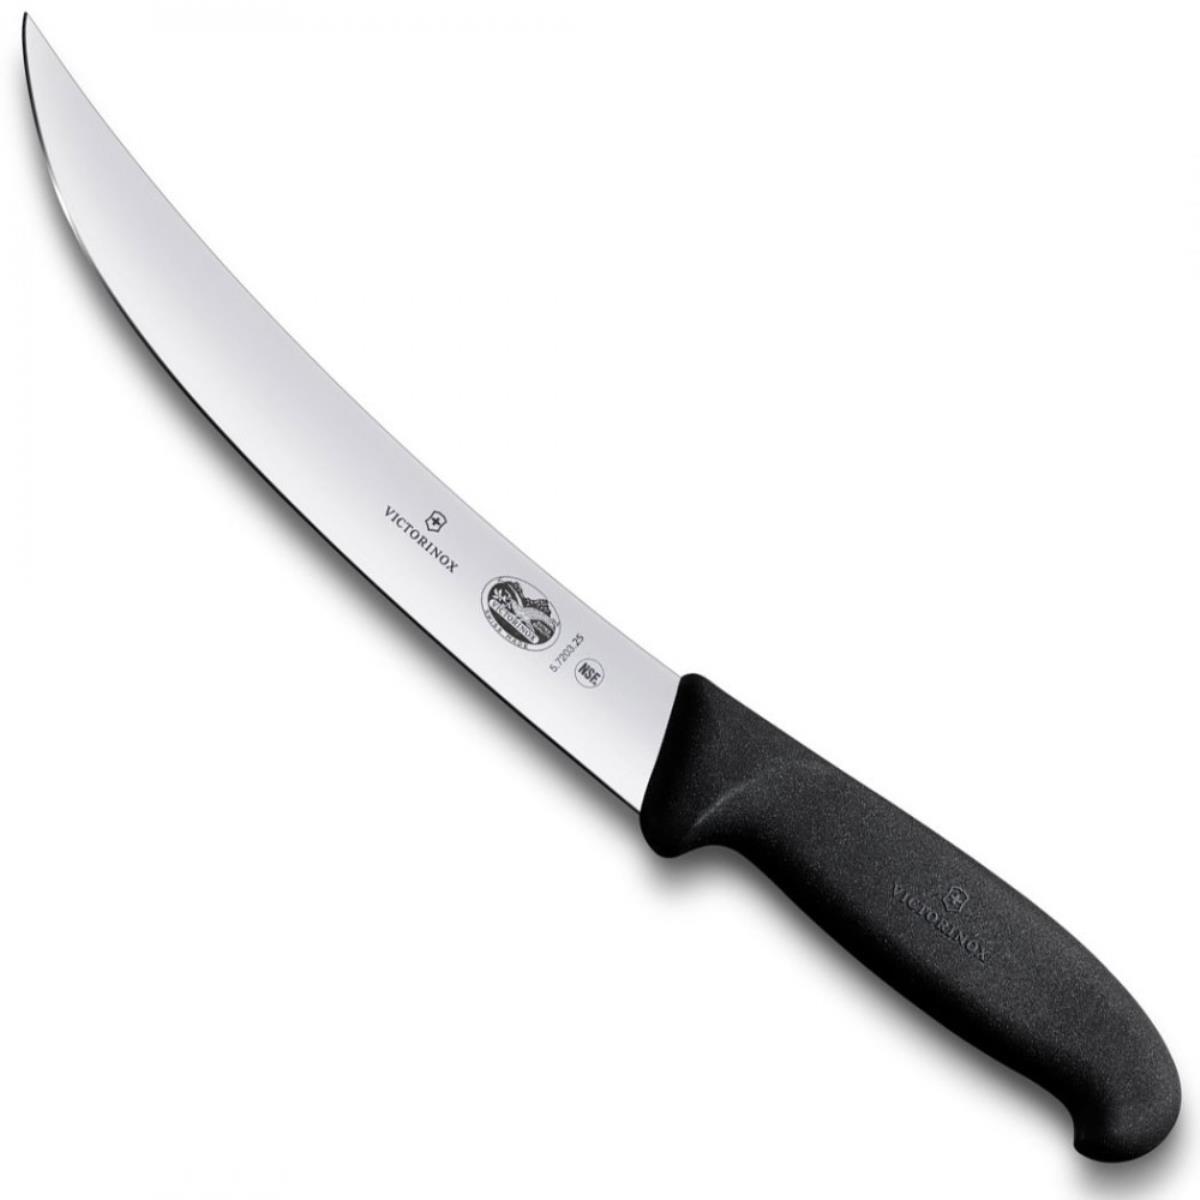 Нож жиловочный с изогнутым лезвием 5.7203.25 VICTORINOX нож 0 6223 942 нож брелок victorinox